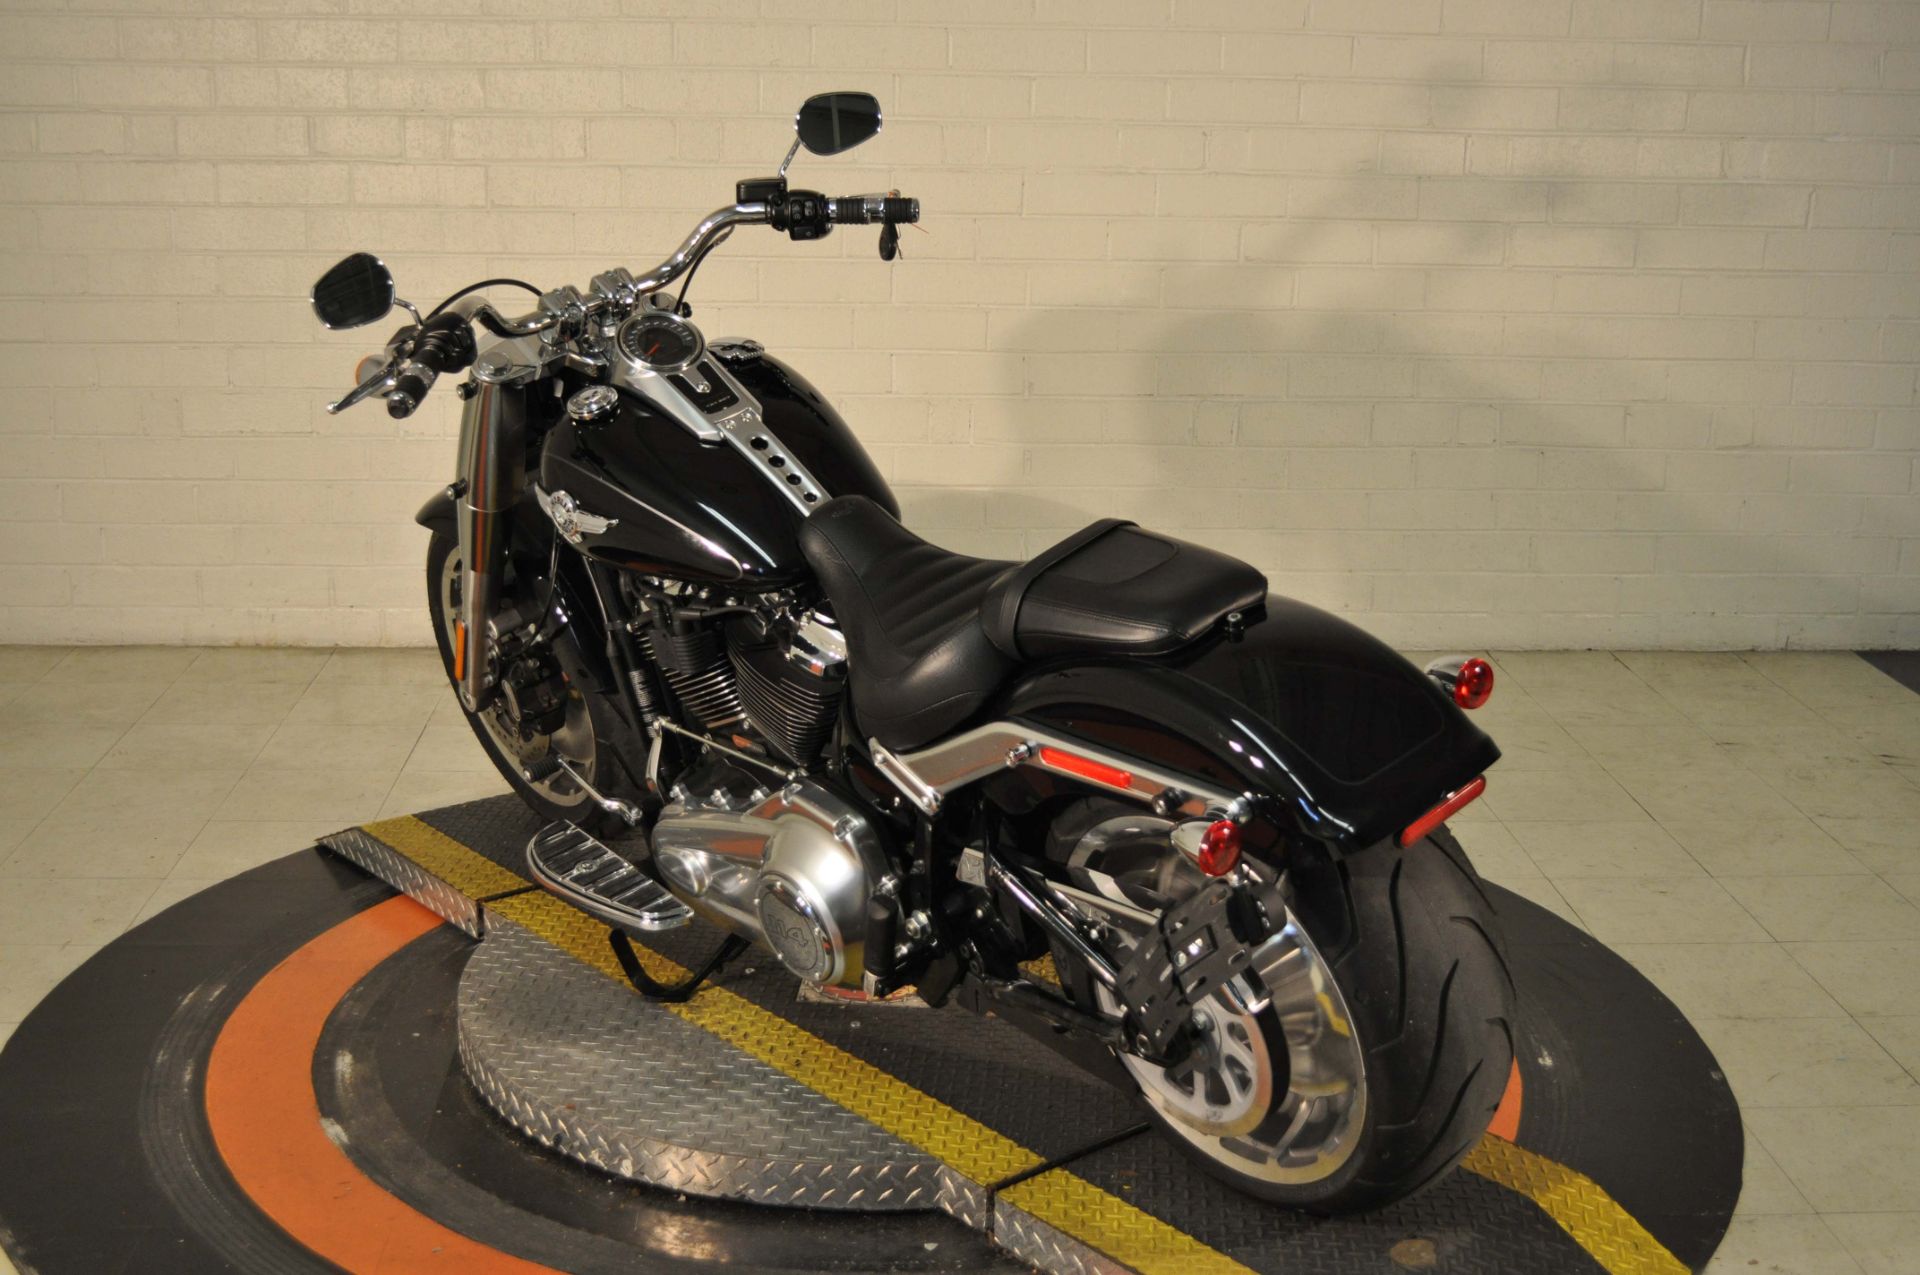 2020 Harley-Davidson Fat Boy® 114 in Winston Salem, North Carolina - Photo 4